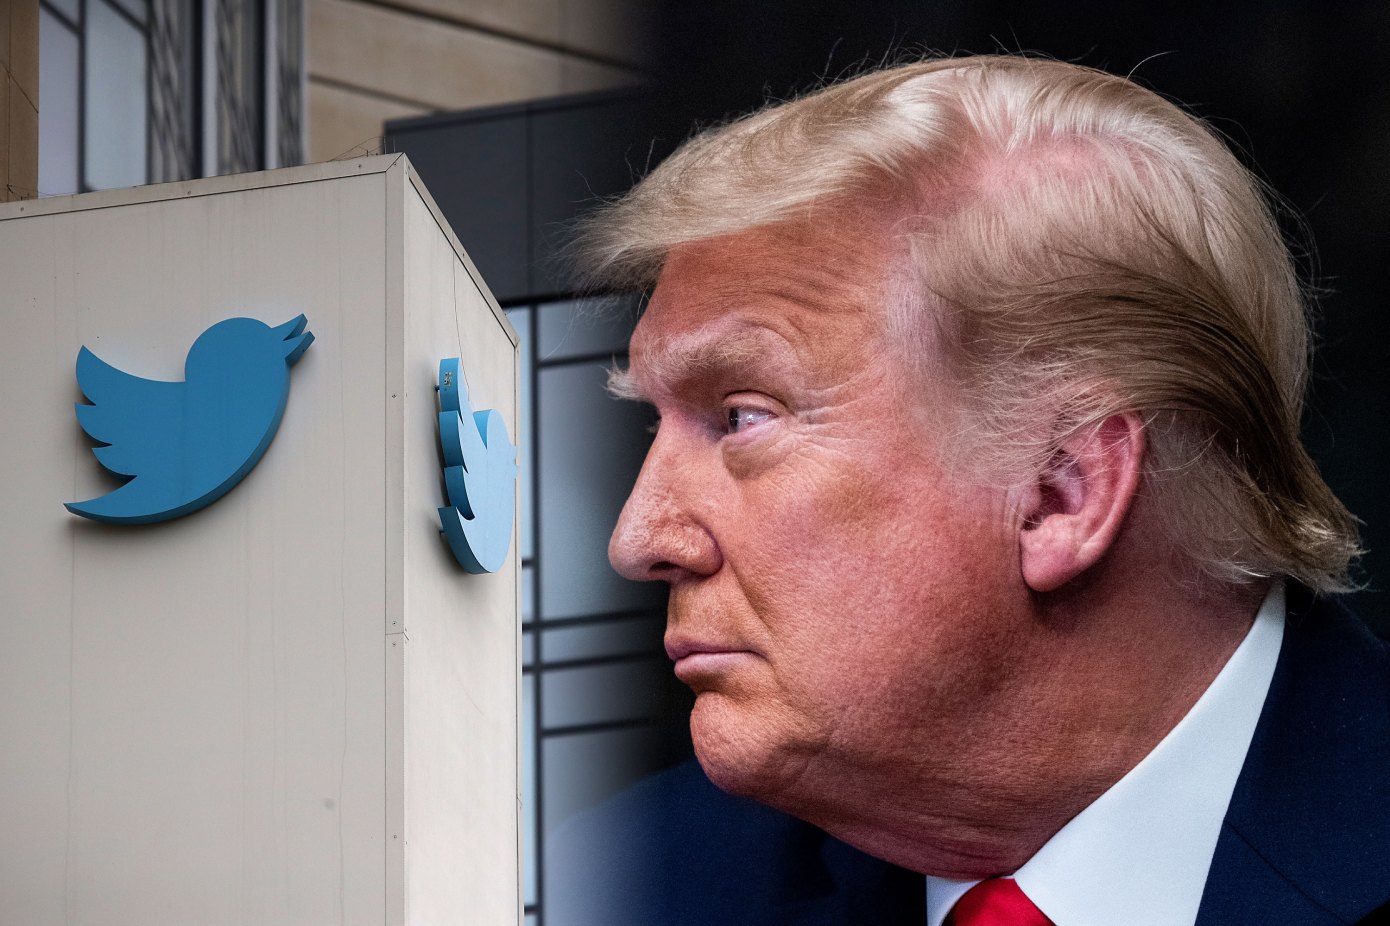 Twitter blocked Trump's account